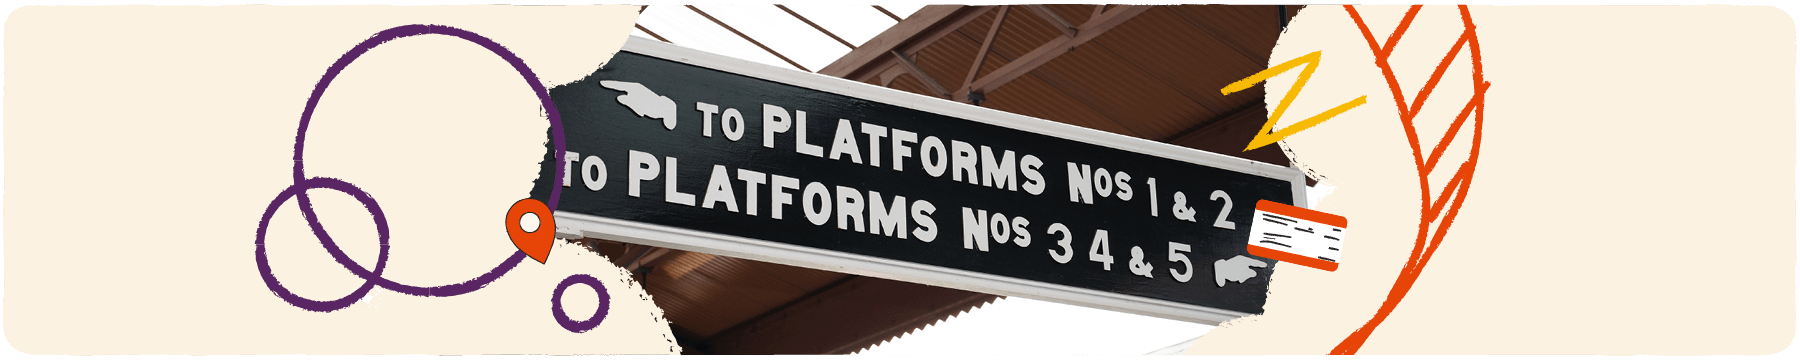 Platform sign